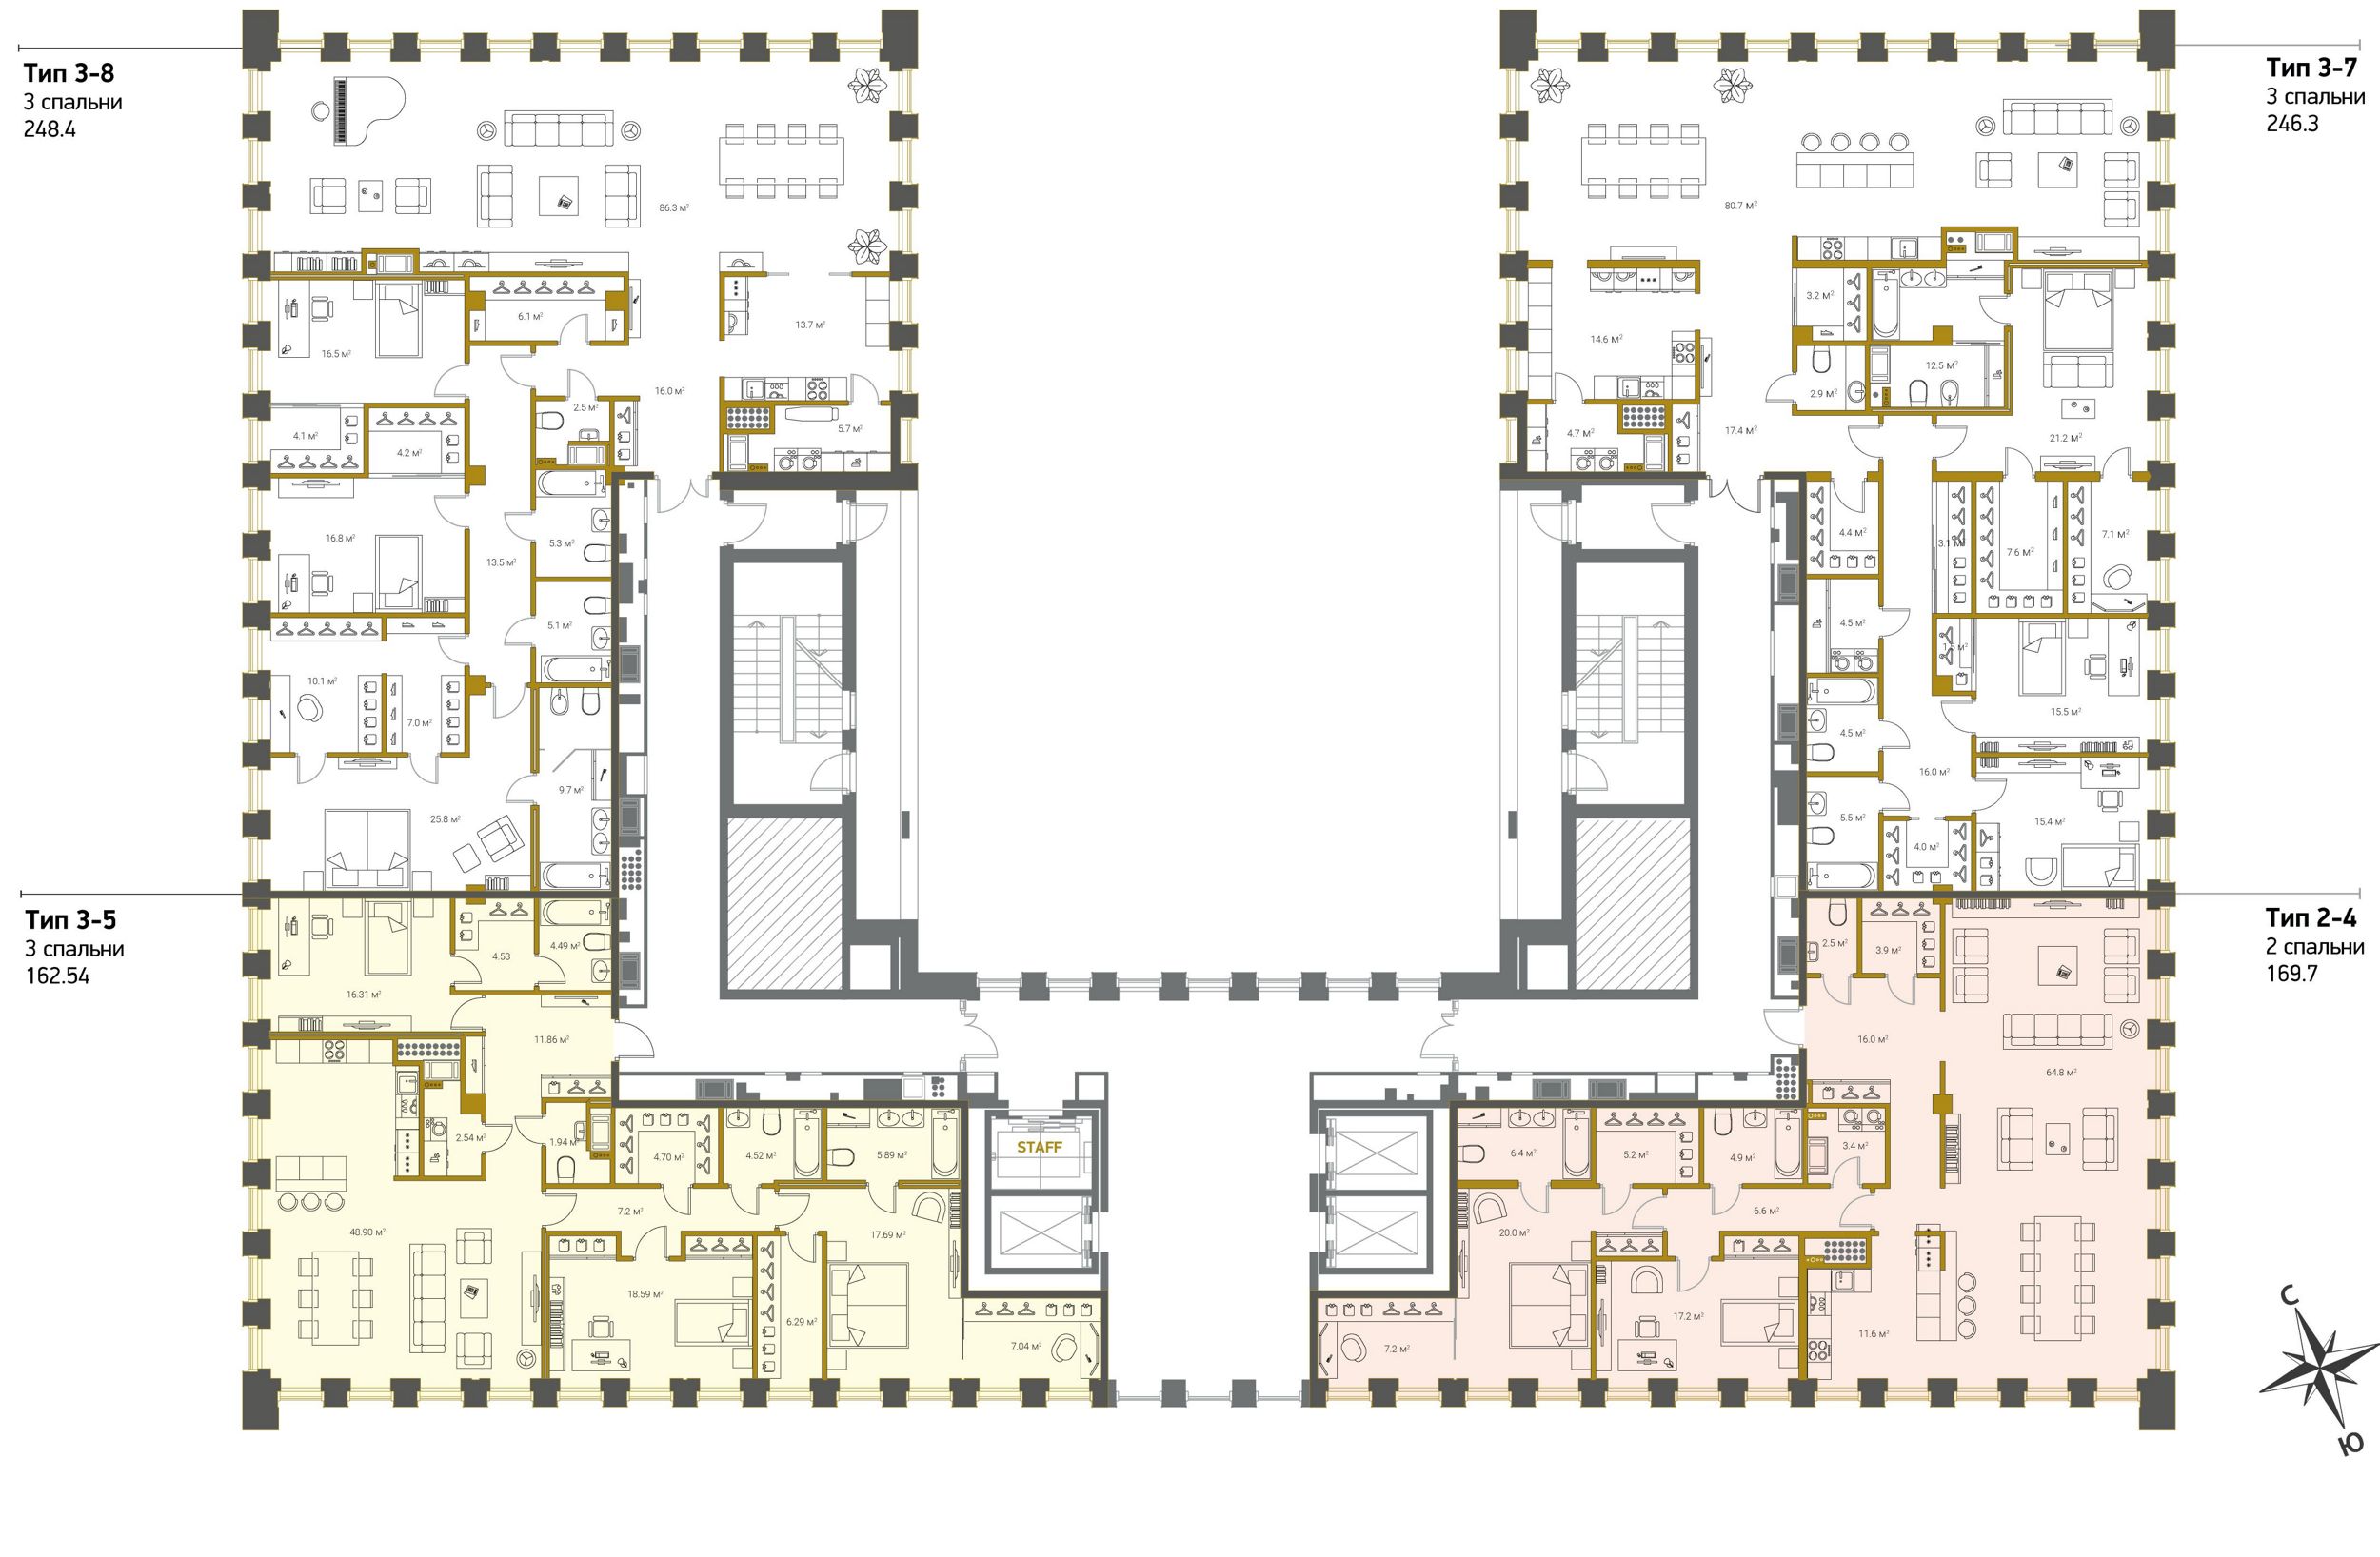 4-комнатная (Евро) квартира, 246.3 м² - планировка этажа